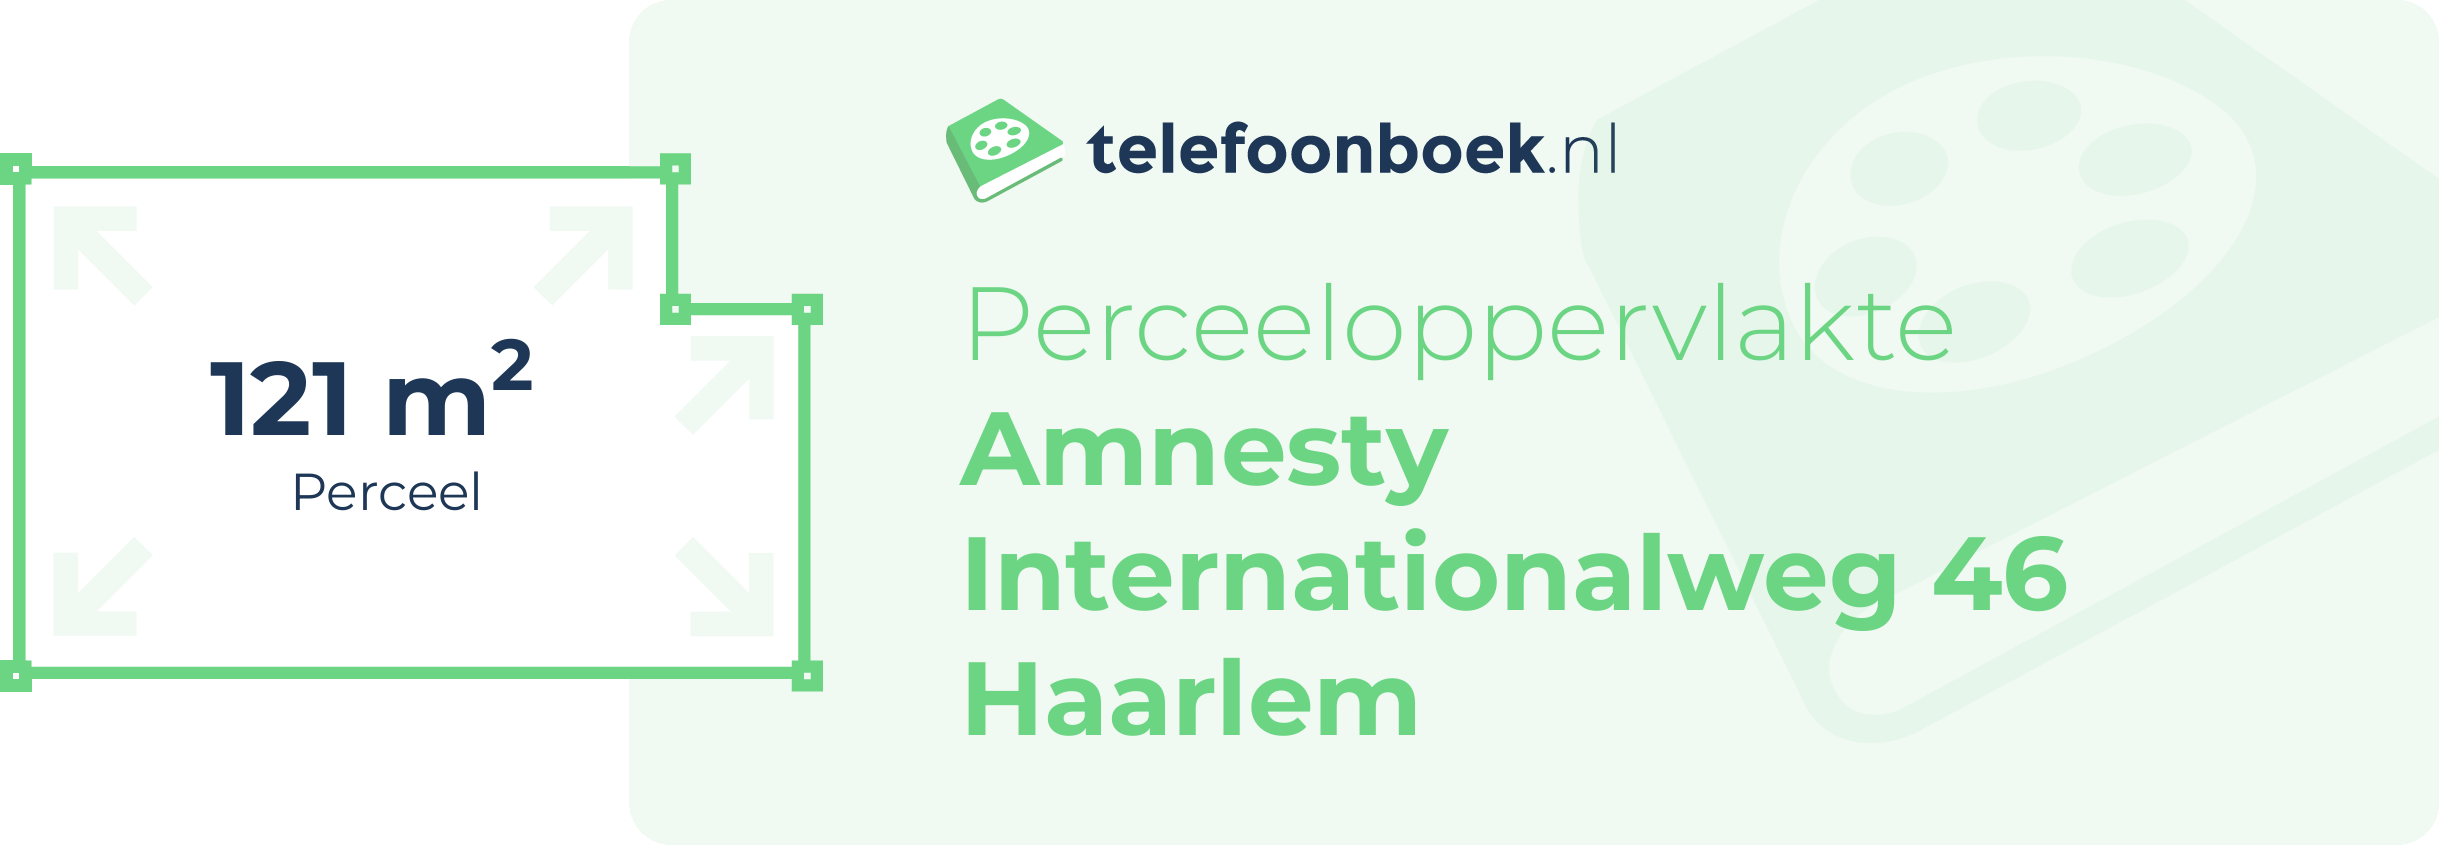 Perceeloppervlakte Amnesty Internationalweg 46 Haarlem